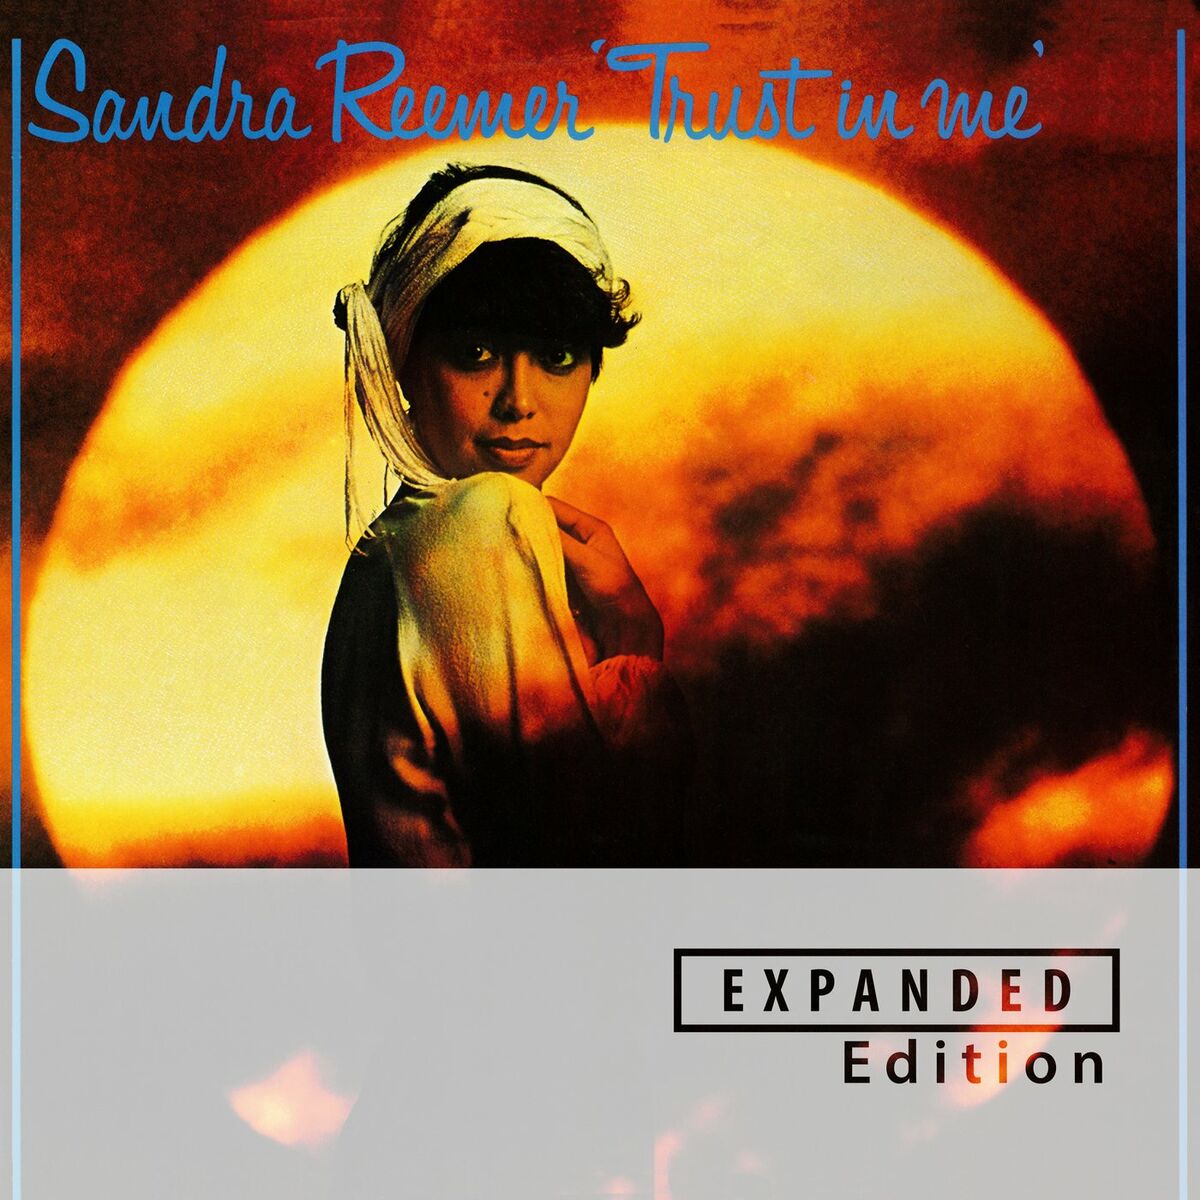 Sandra Reemer: albums